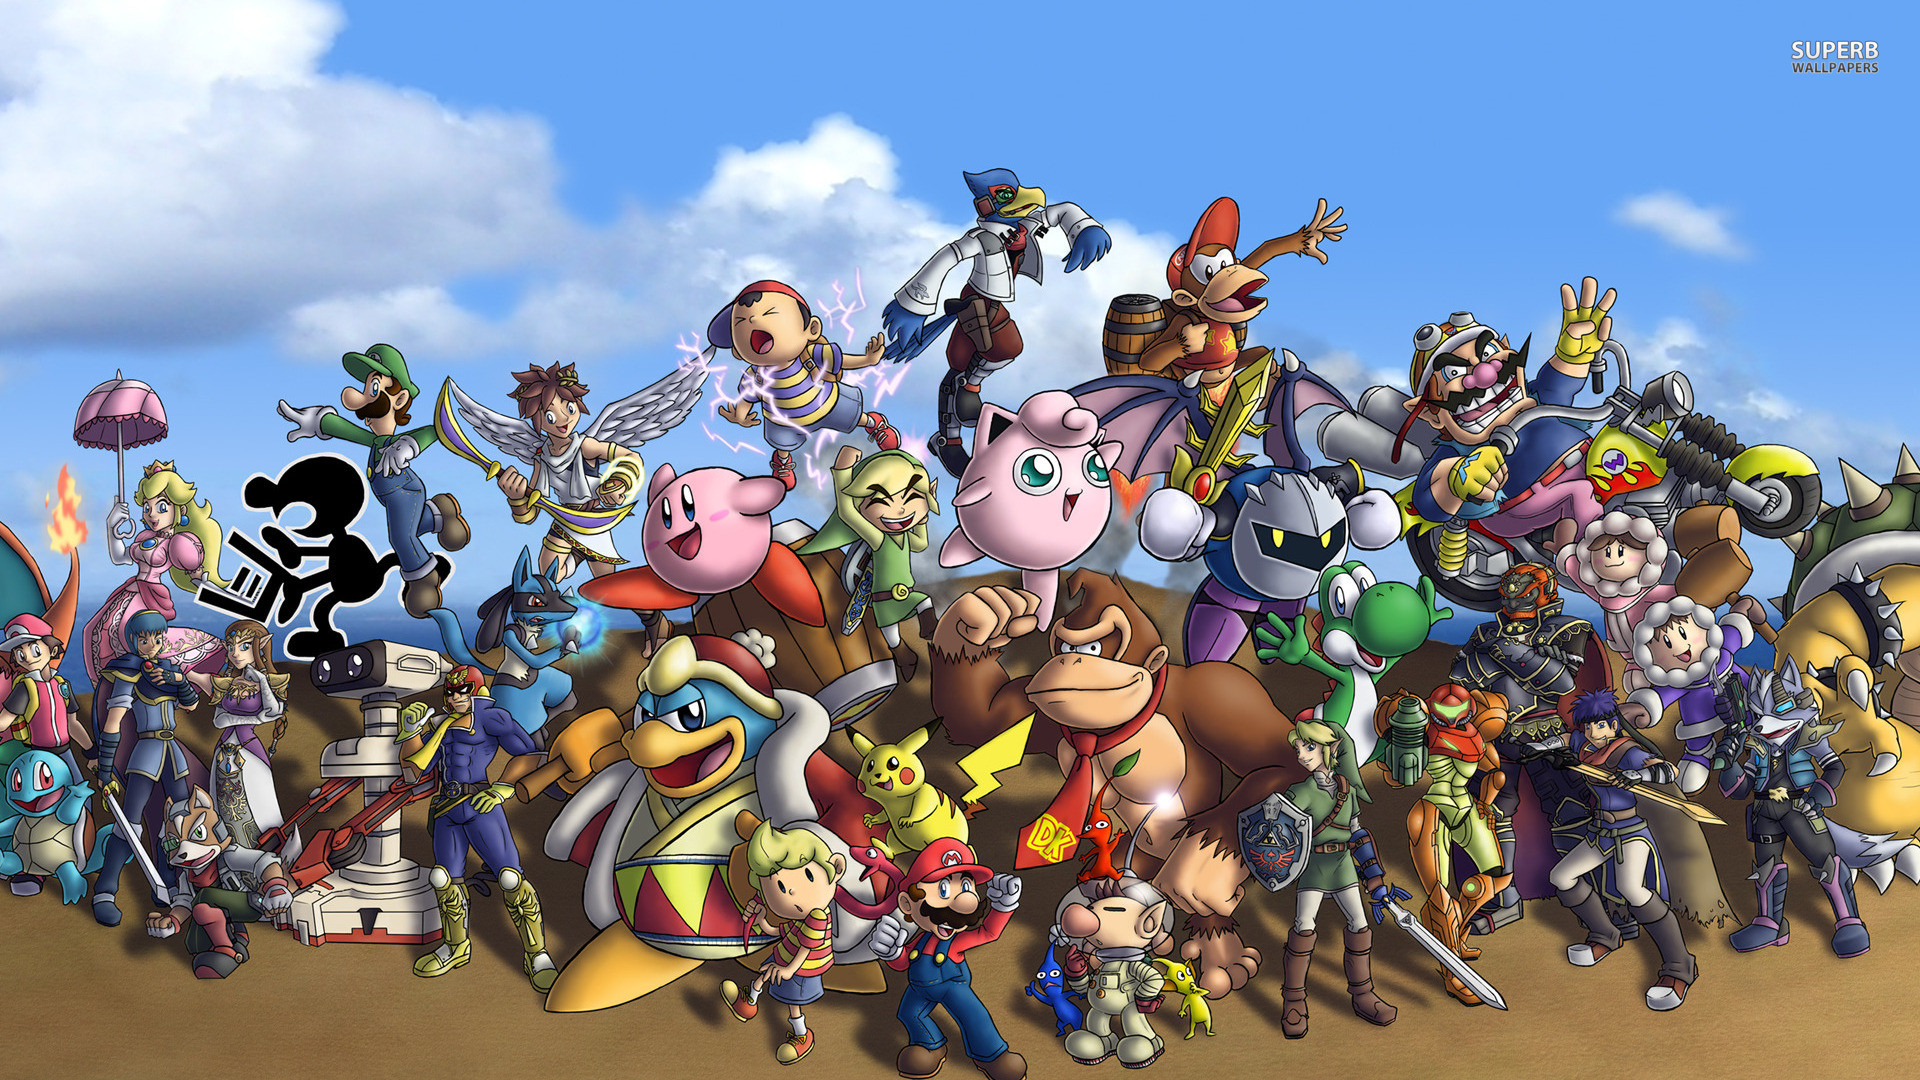 Super Smash Bros Wallpaper